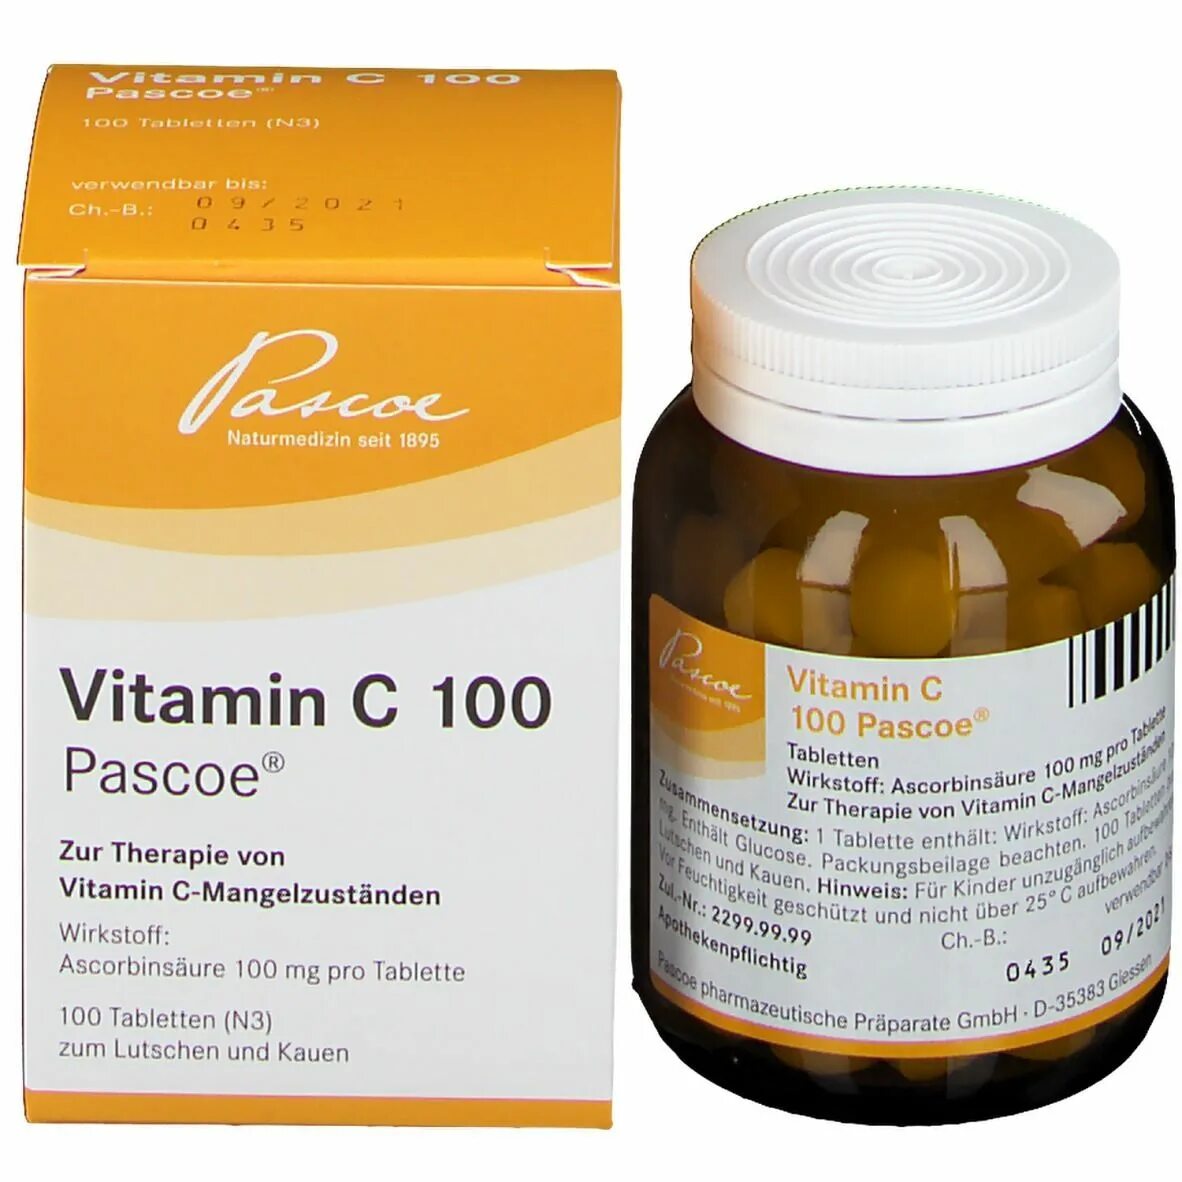 Vit c 5. Pascoe. Витамины в Pascoe. Vitamin c. Югославские витамины.